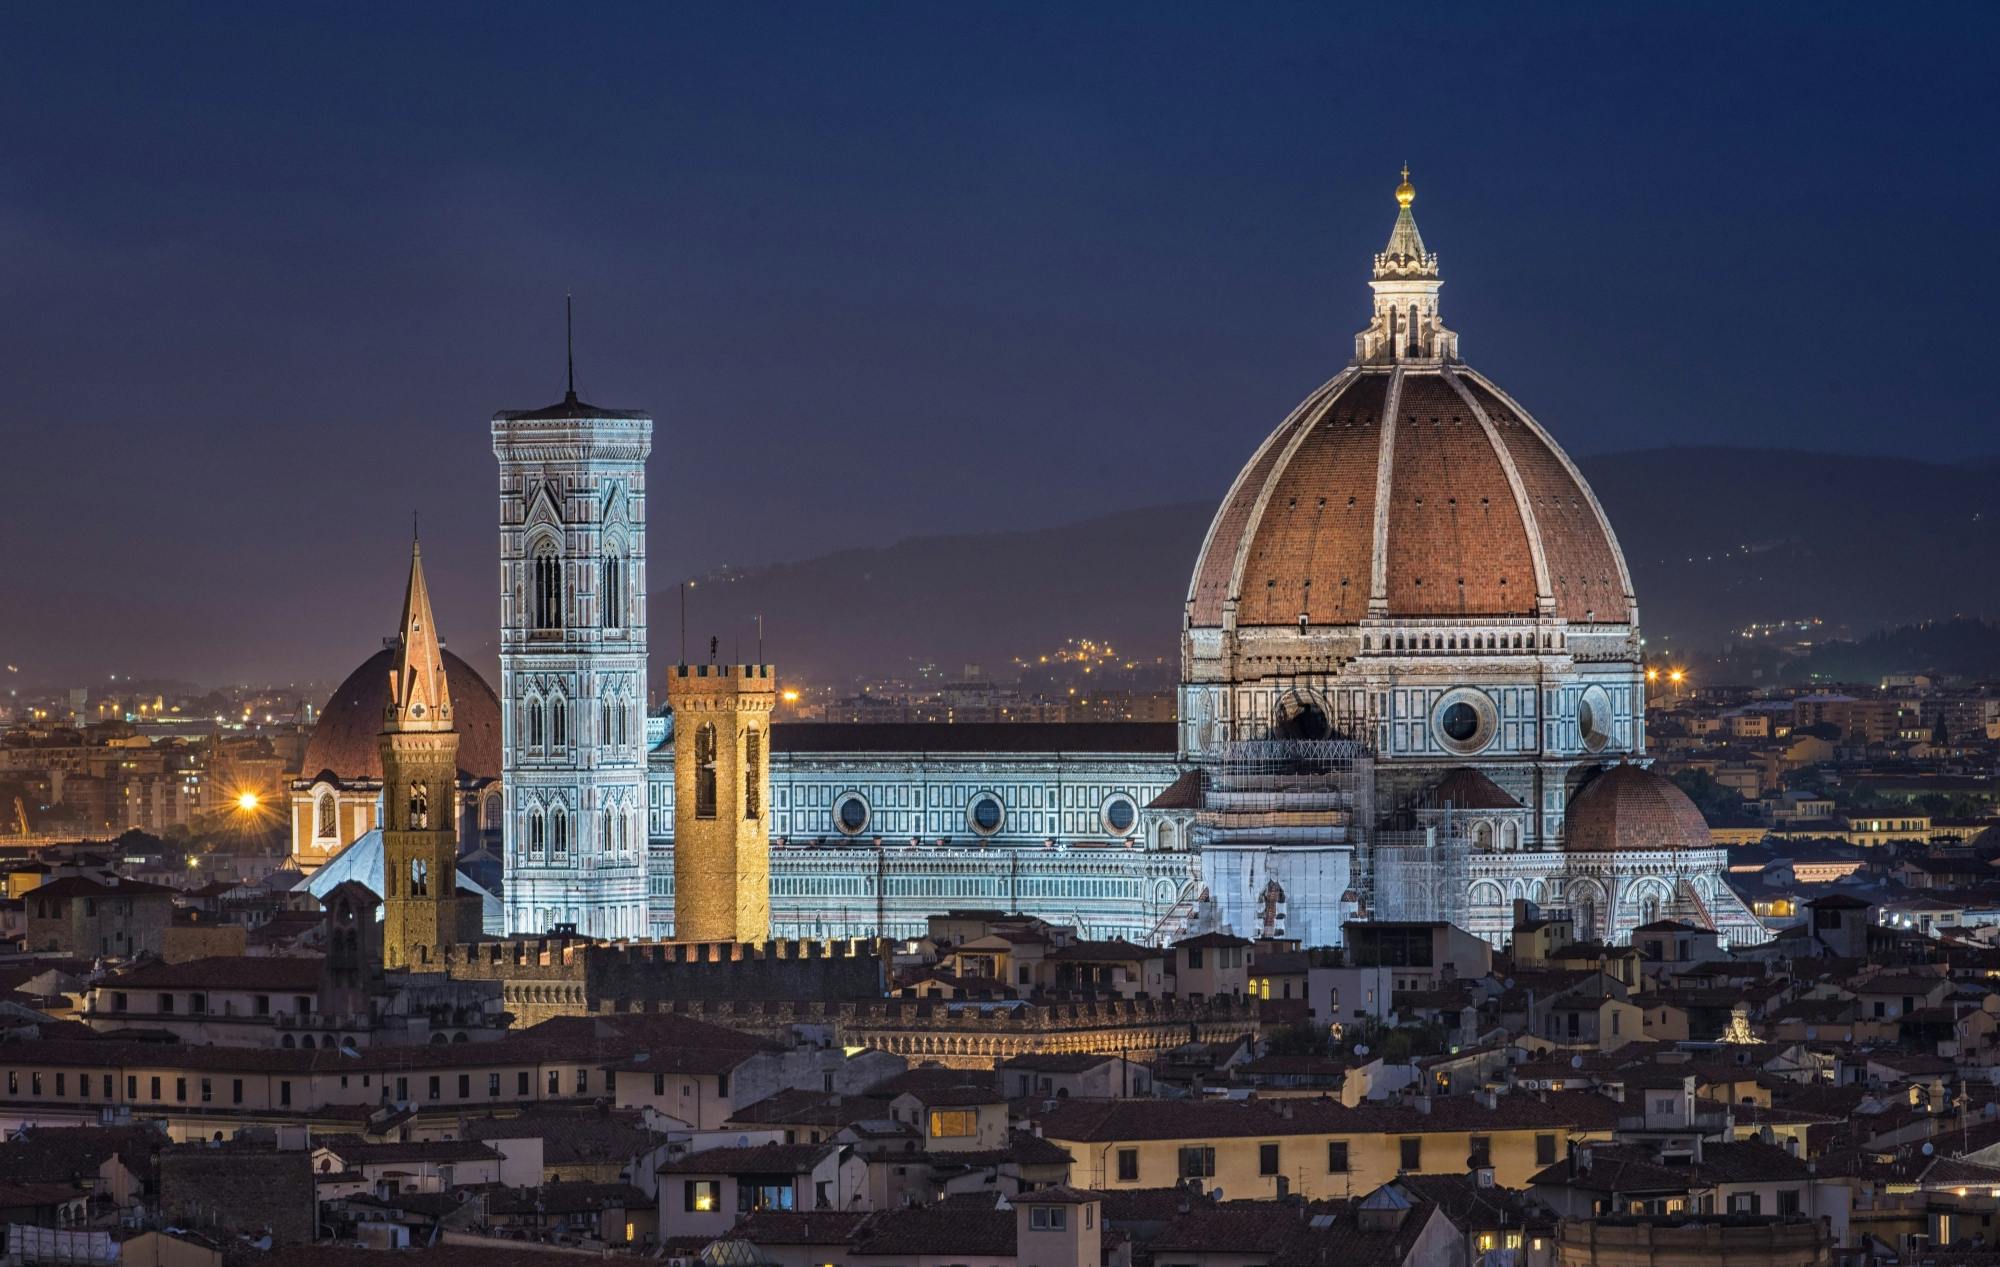 "Michelangelo's Florence", online exploration game